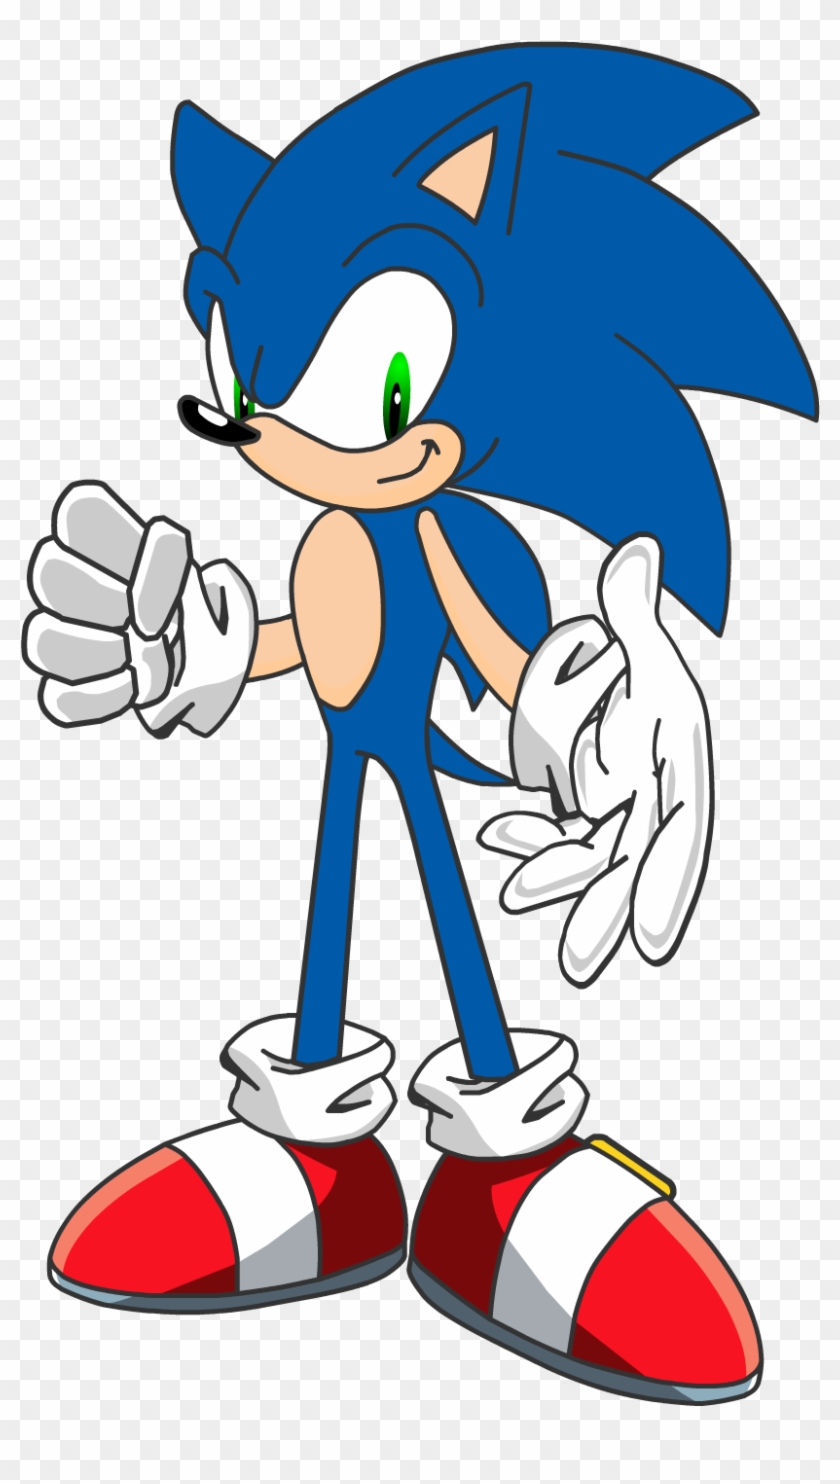 Sonic The Hedgehog Vector Art By Fireball Stars On - Sonic The Hedgehog Vector Art #1020723